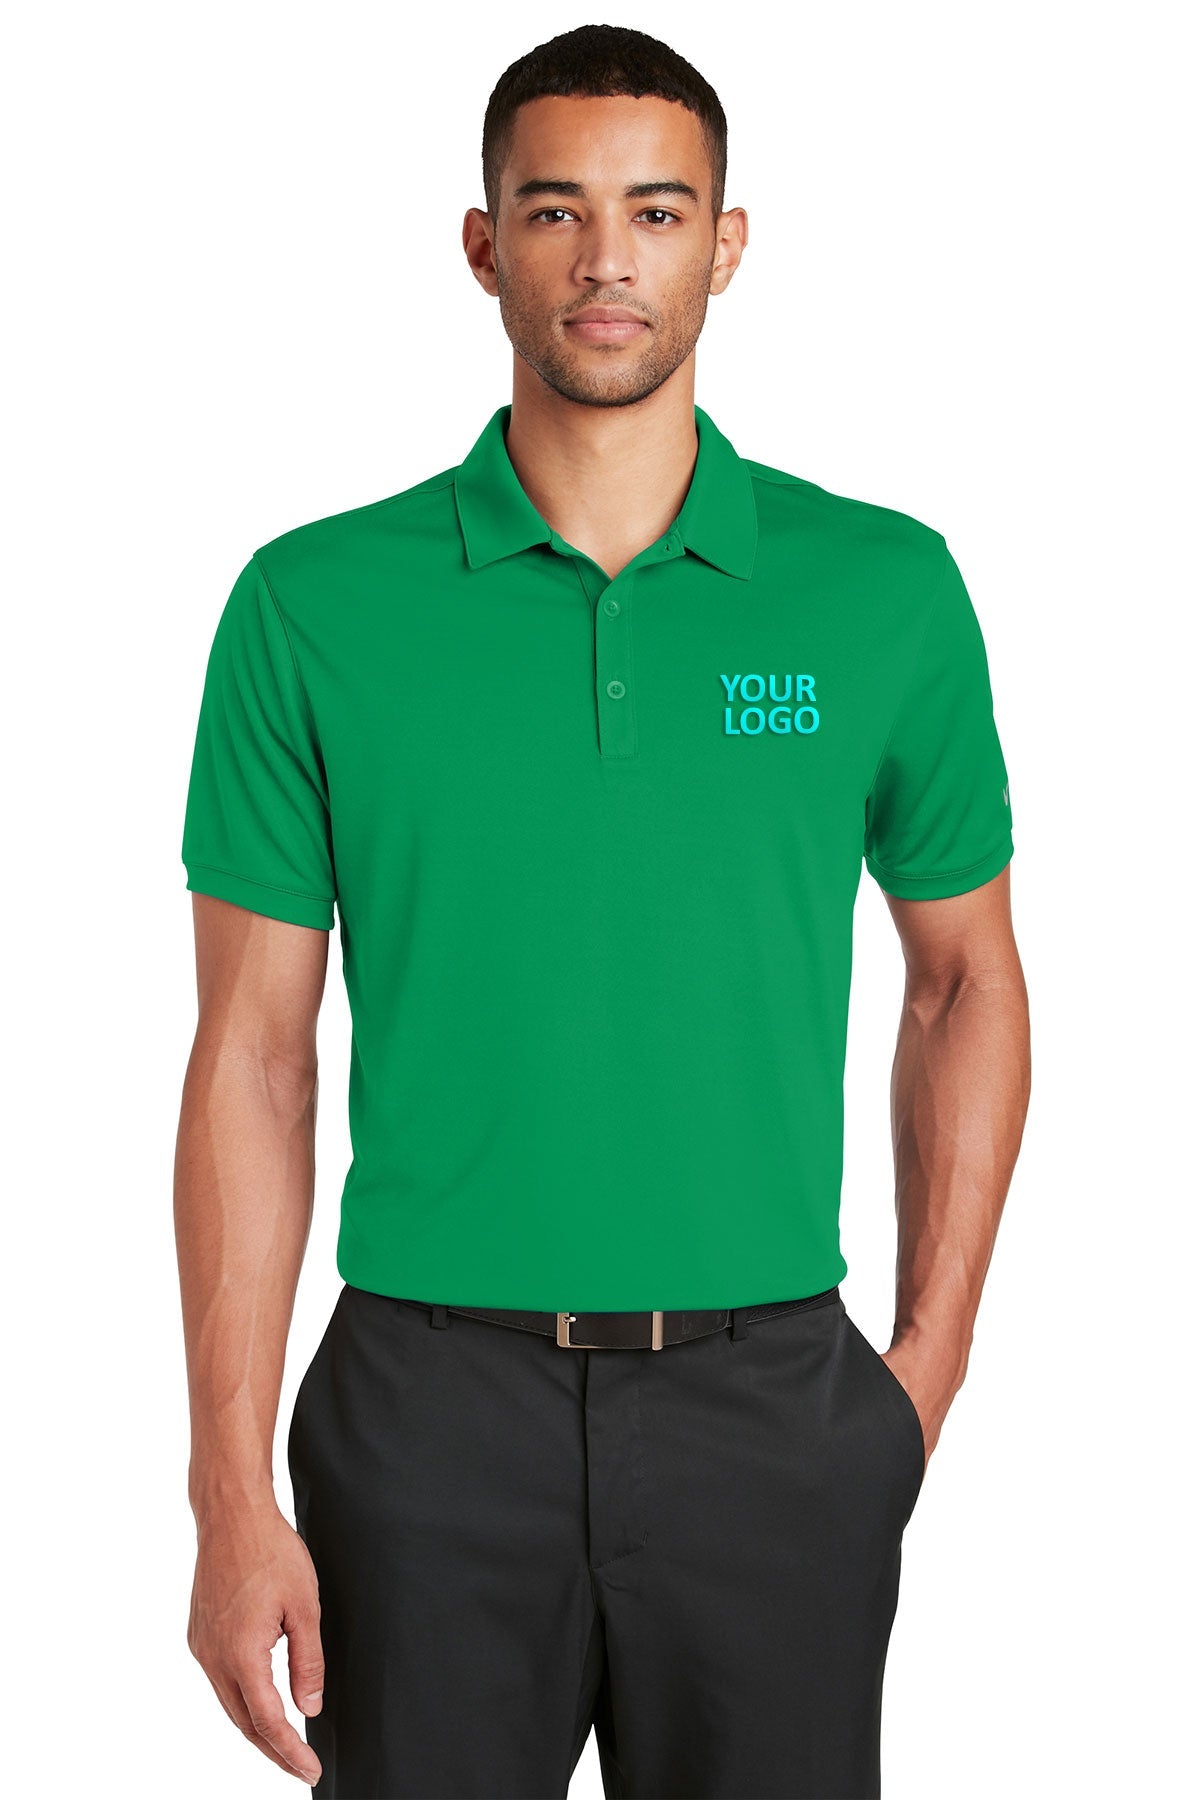 nike pine green 799802 quality polo shirts with company logo